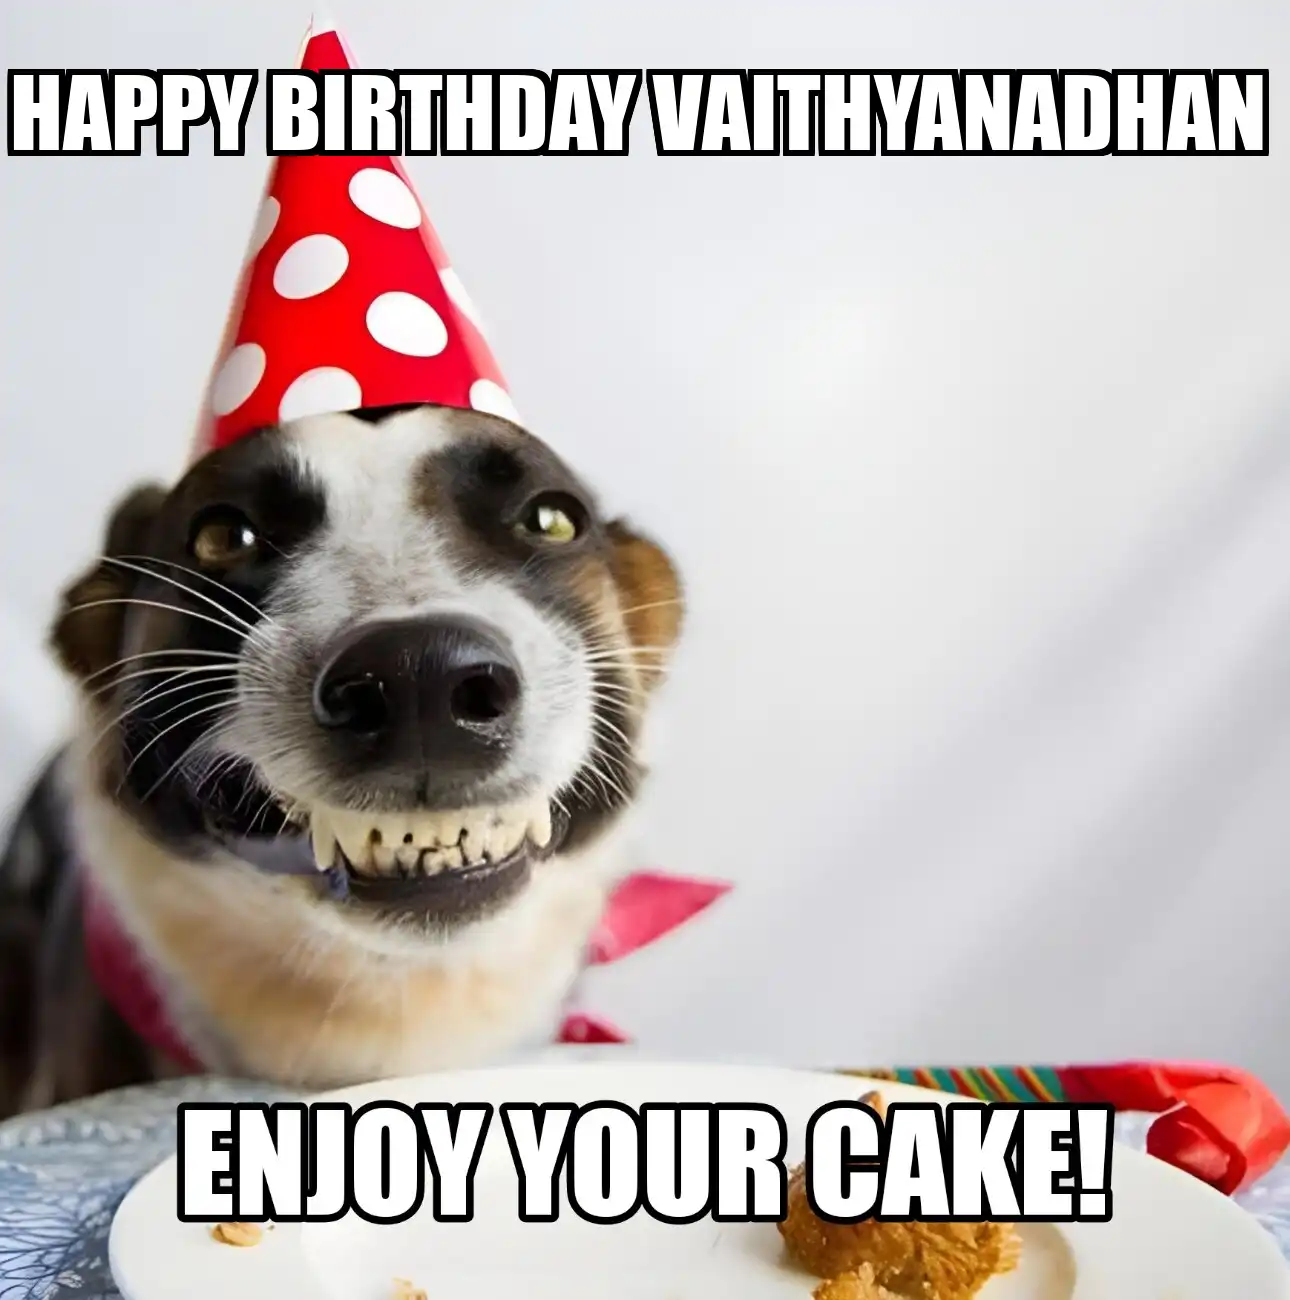 Happy Birthday Vaithyanadhan Enjoy Your Cake Dog Meme